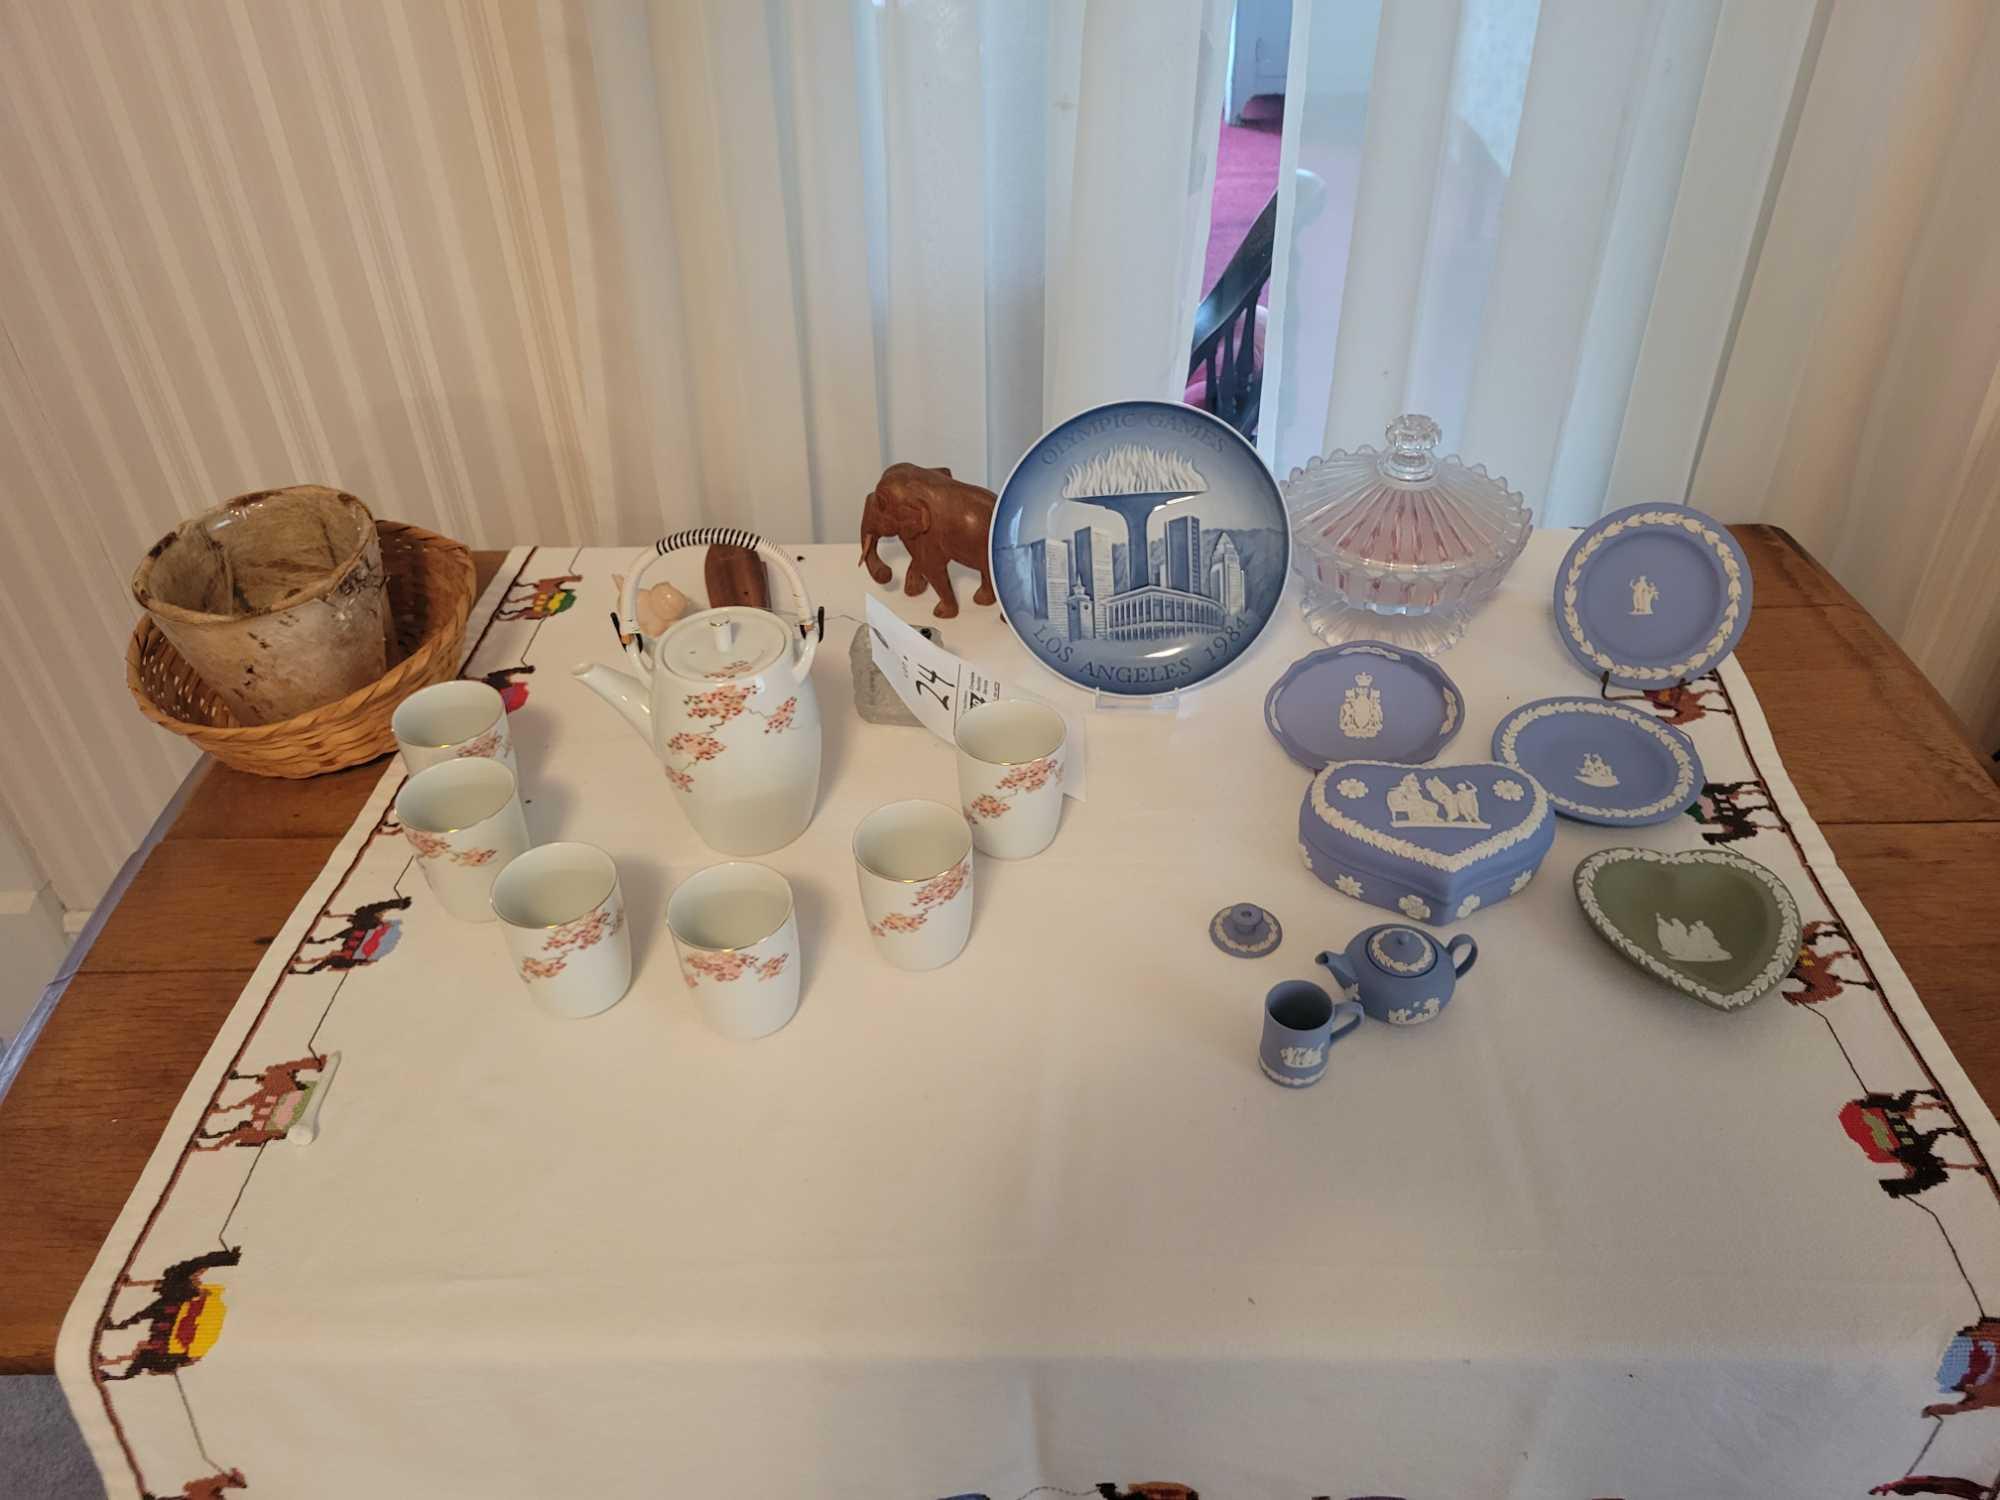 Oriental tea set, wedgewood plates, miniature teapot, covered piece, animal figures, glassware